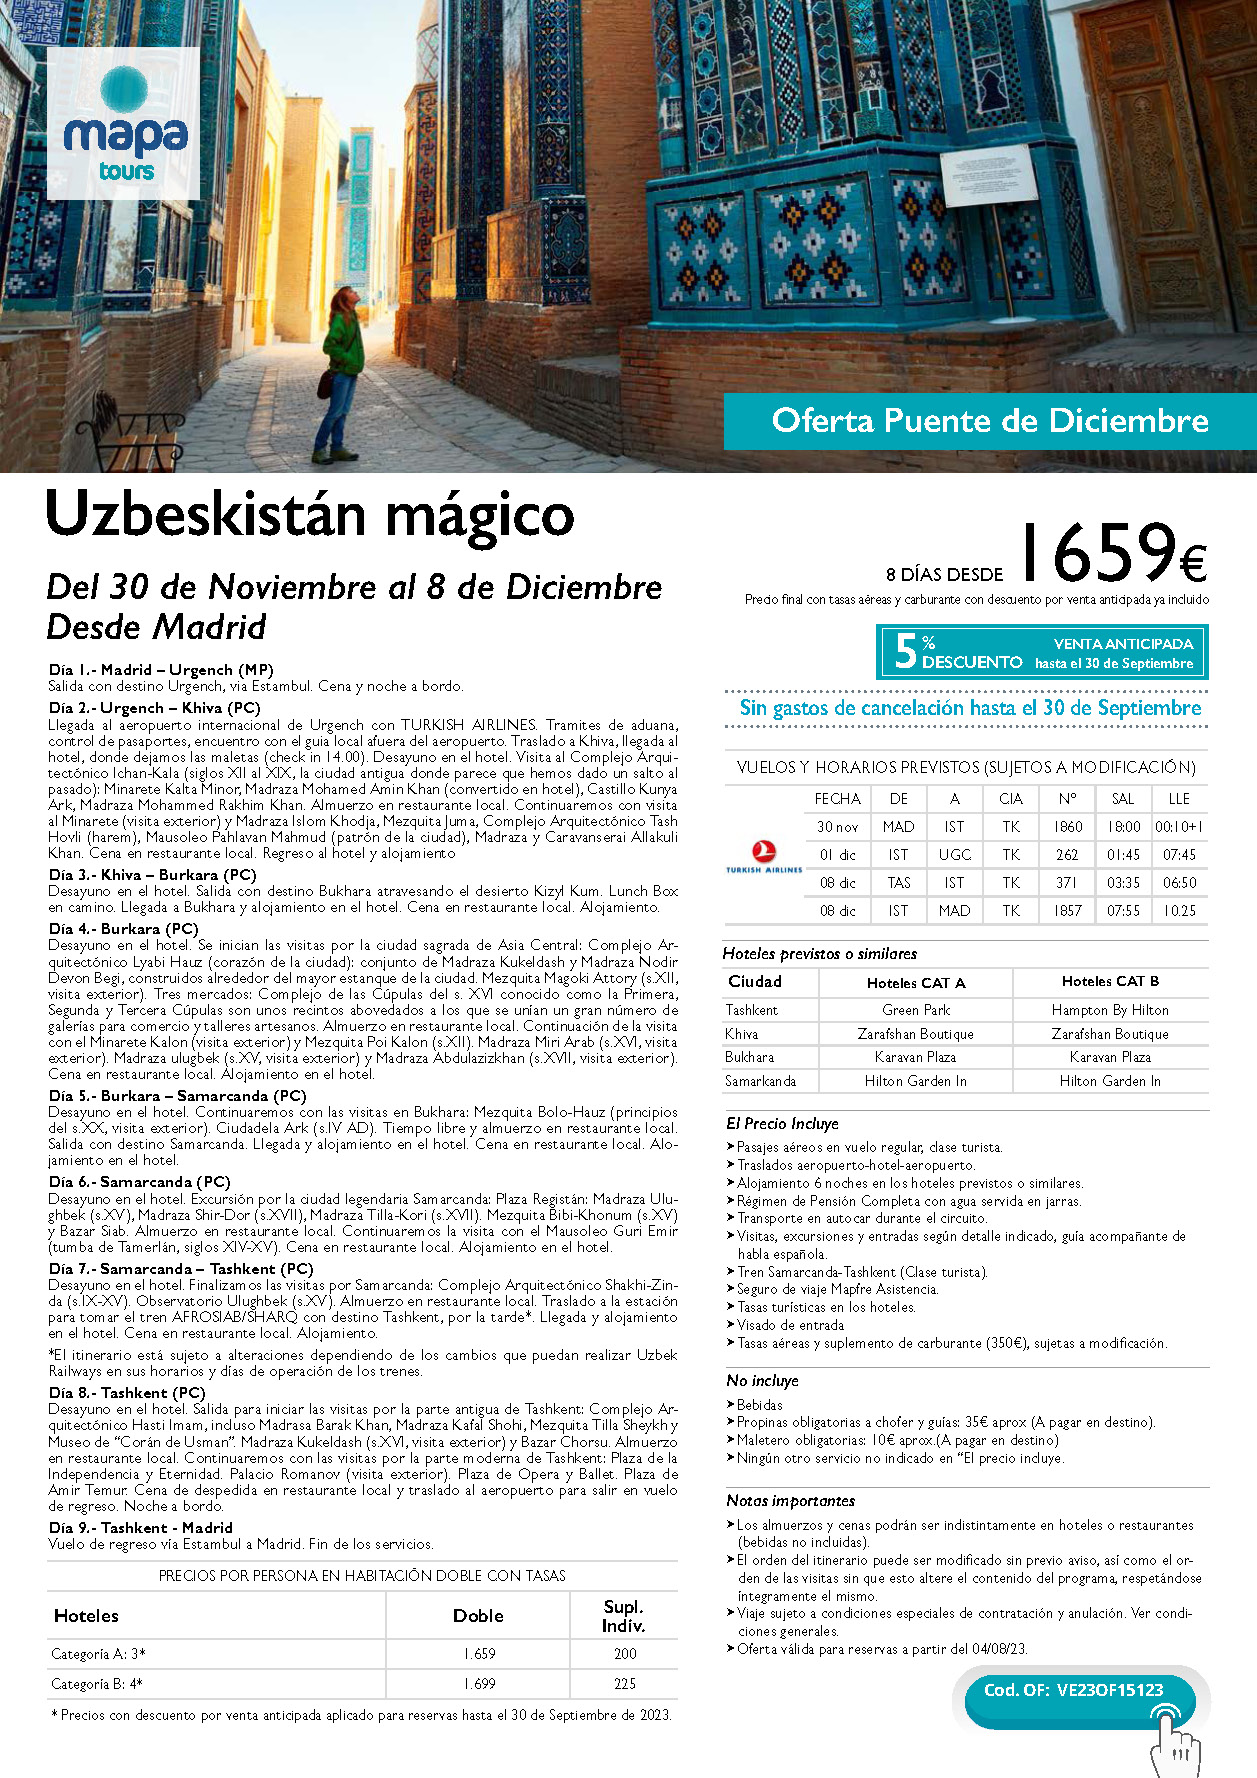 Oferta Mapa Tours Puente de Diciembre 2023 circuito Uzbekistan Magico 8 dias salida 30 de noviembre desde Madrid vuelos Turkish